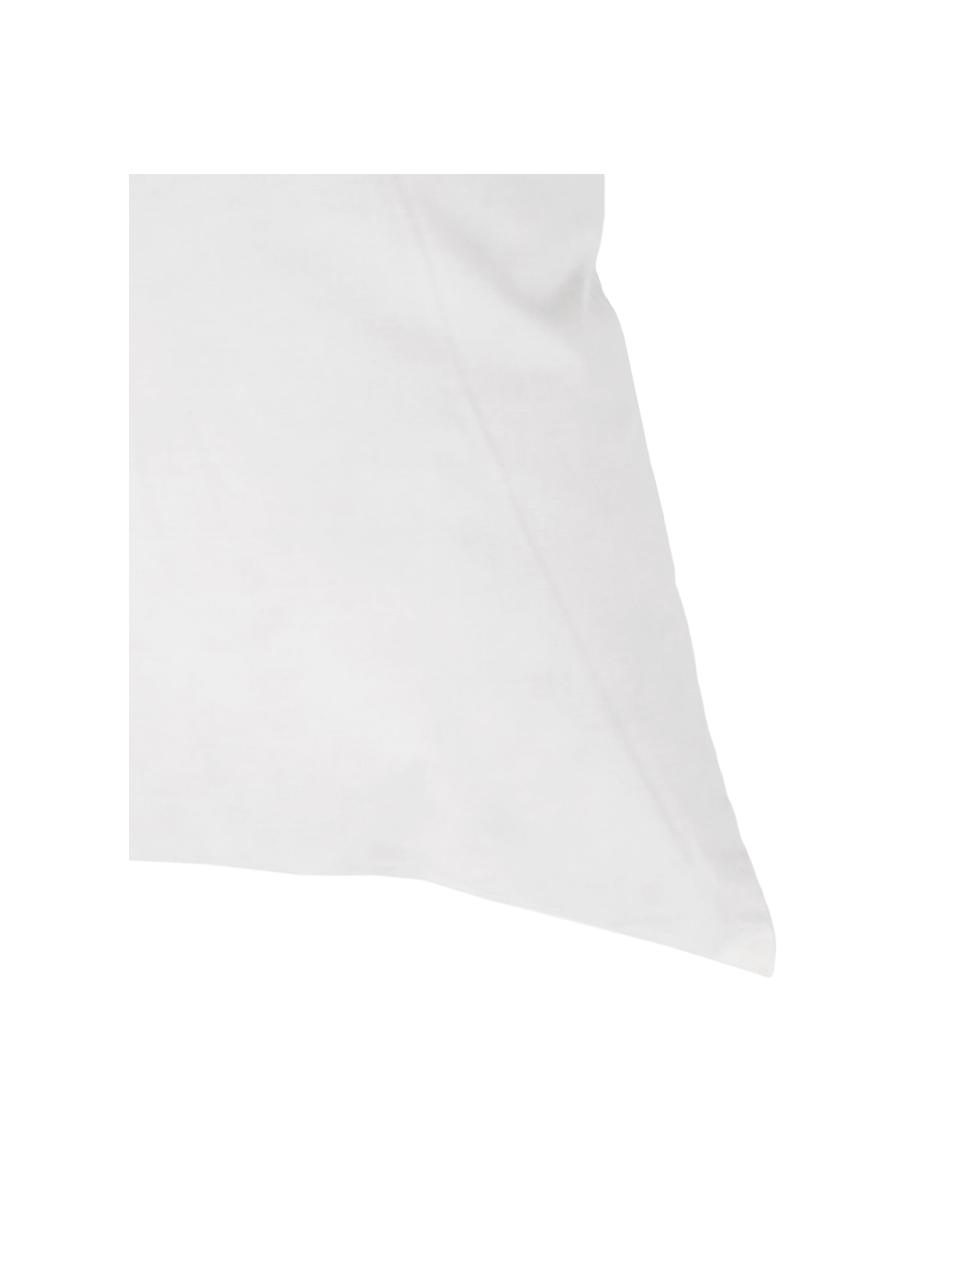 Relleno de cojín Premium, 40 x 40, Funda: percal Mako, 100% algodón, Blanco, An 40 x L 40 cm